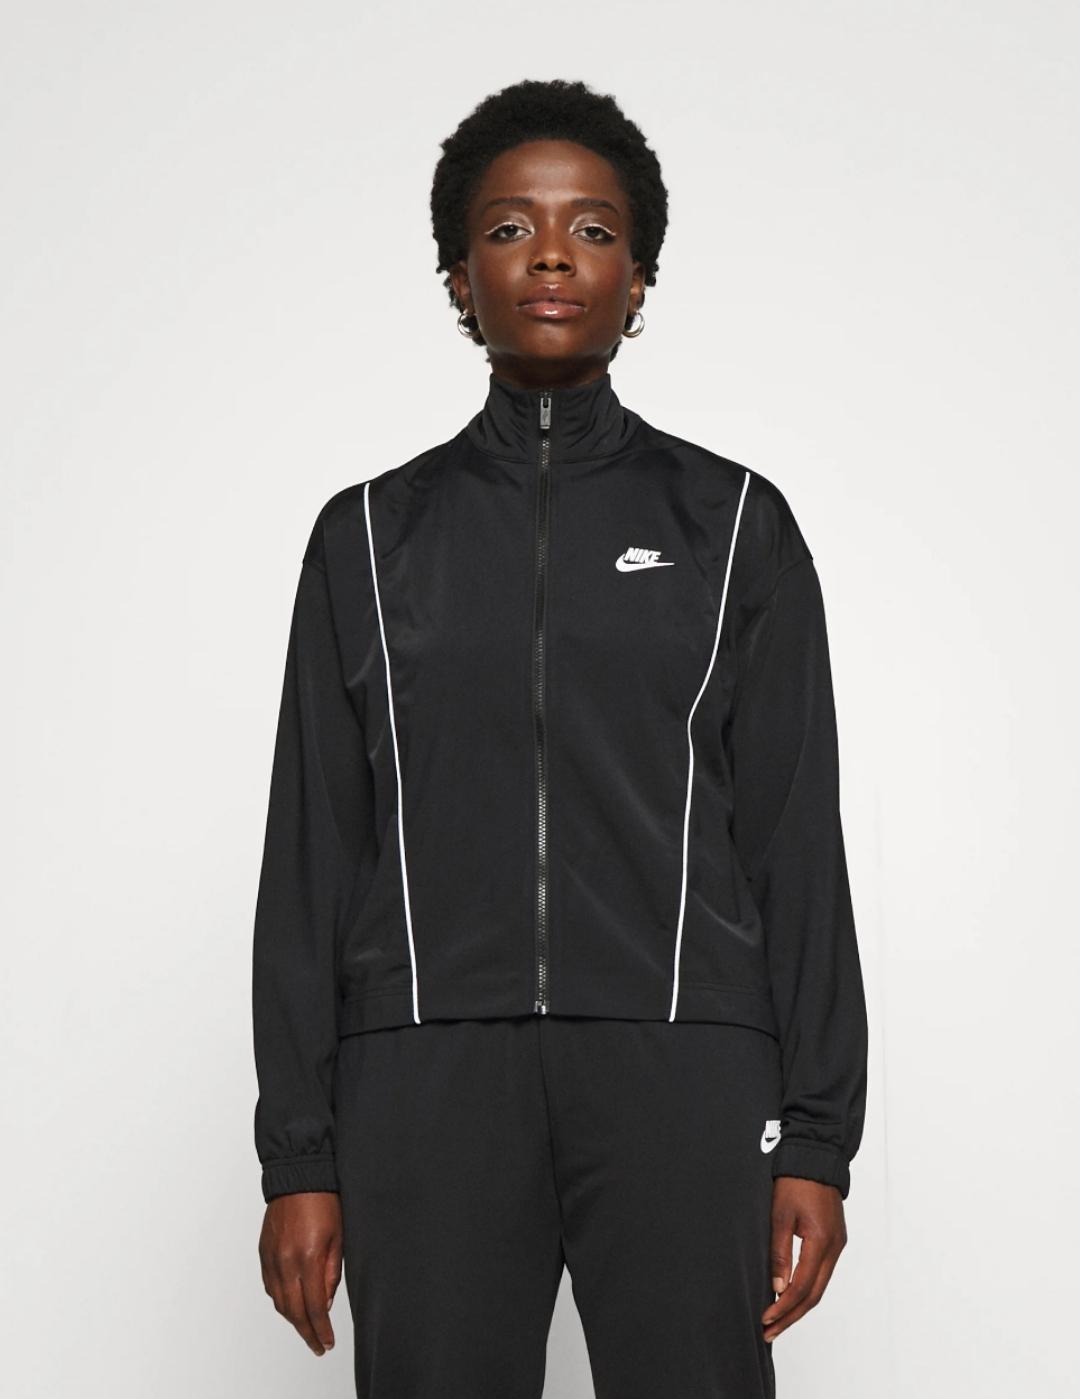 Chándal Nike Sportswear para Mujer Negro/Blan